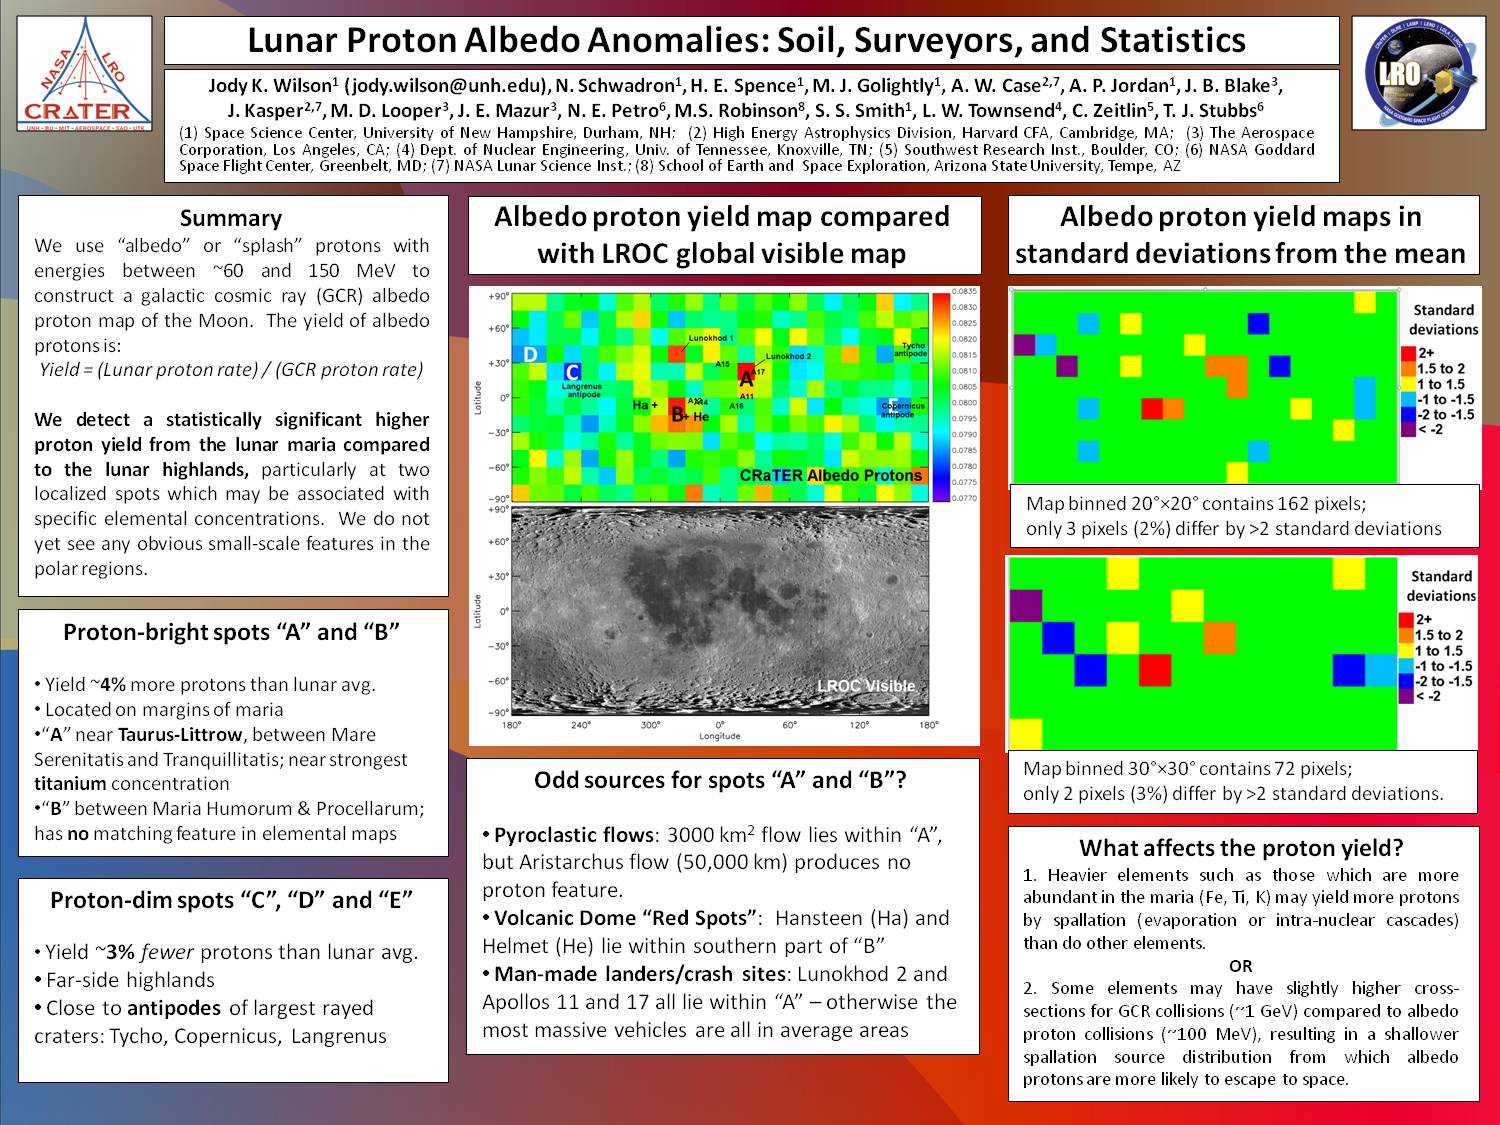 Lunar Proton Albedo Anomalies: Soil, Surveyors, And Statistics by jkwilson